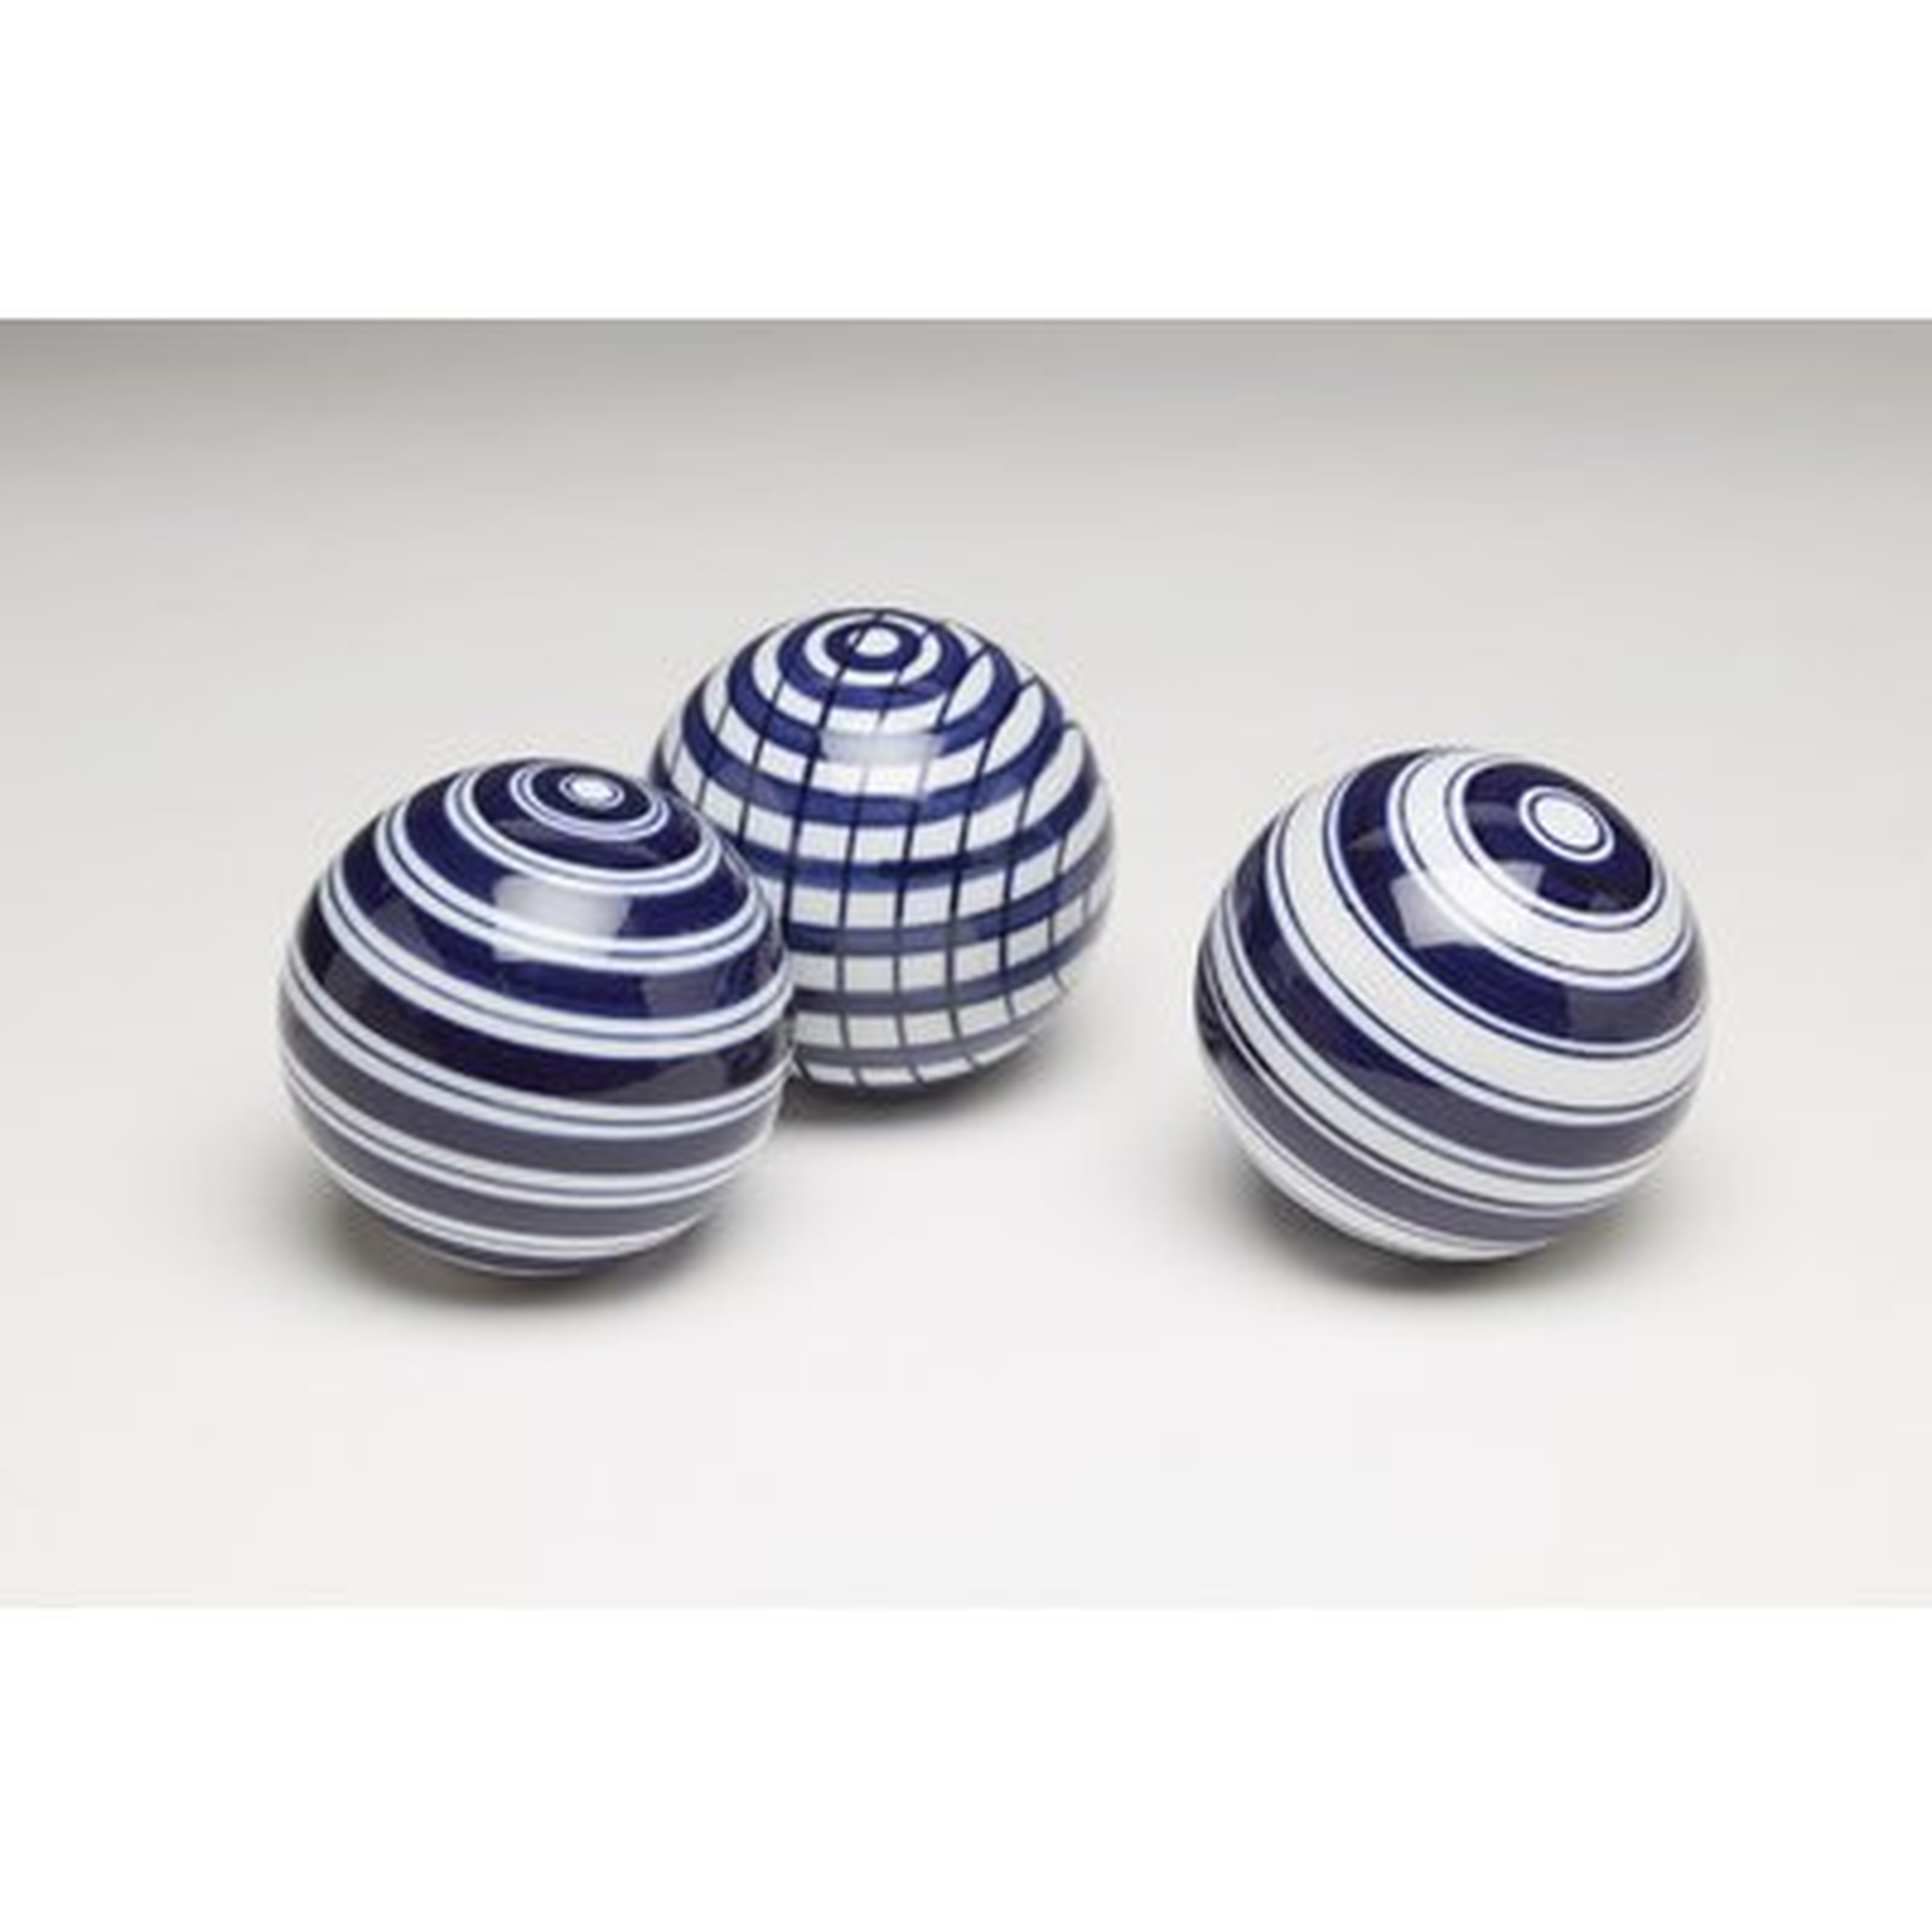 3 Piece Hurley Decorative Balls Vase Filler Set - Wayfair